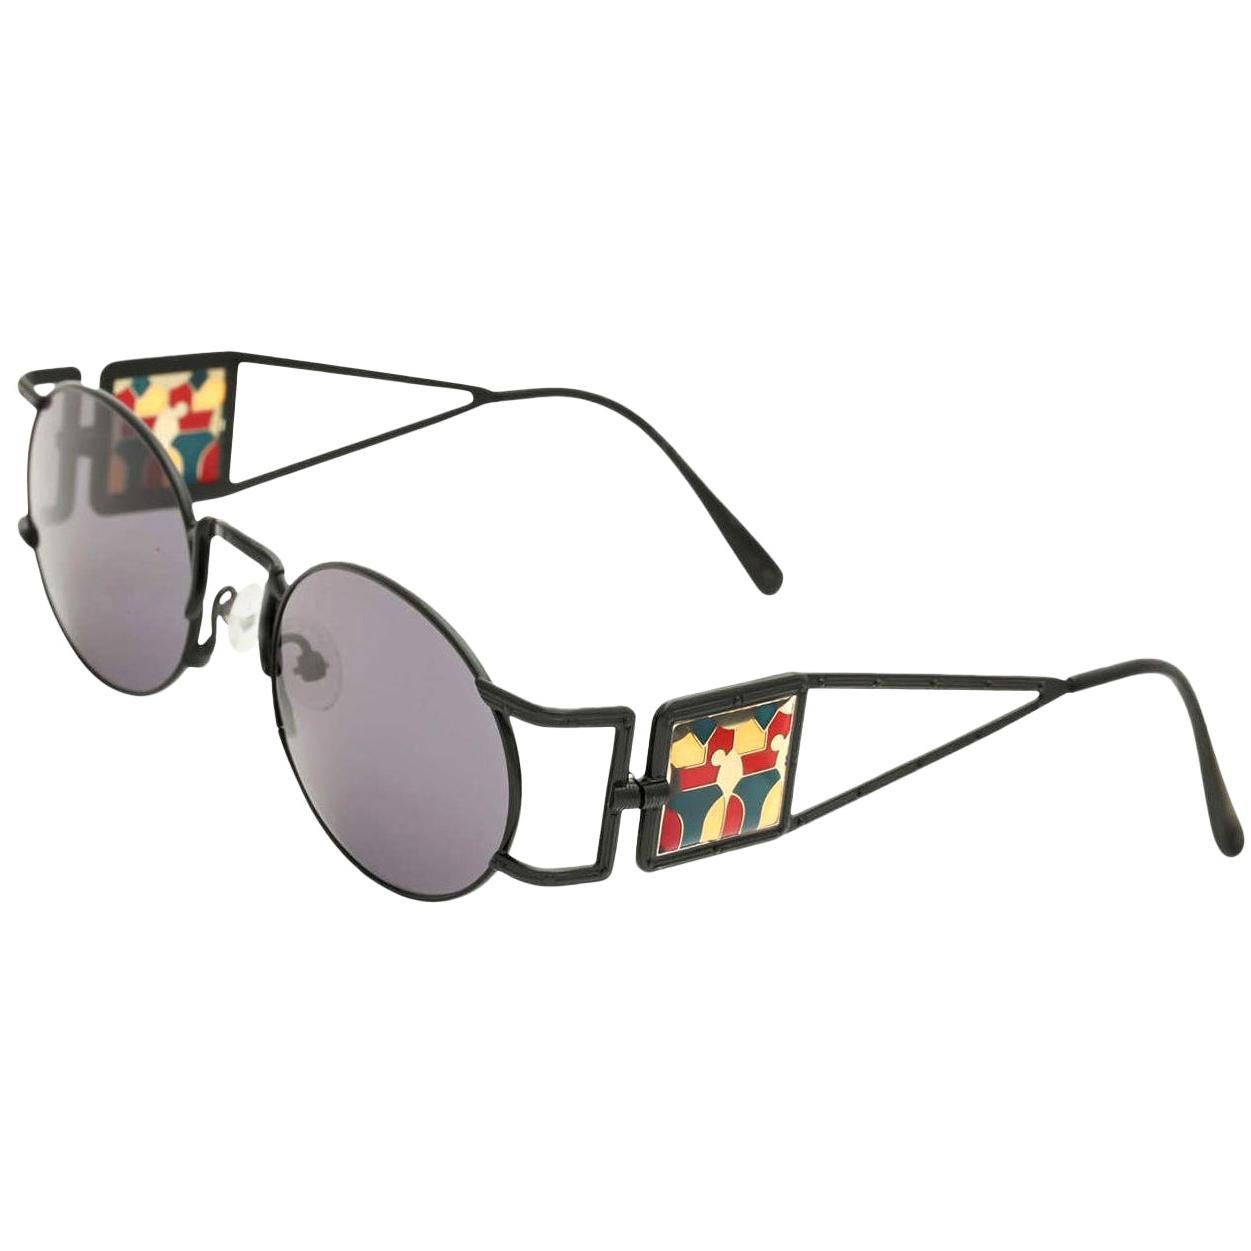 Jean Paul Gaultier Vintage Sunglasses 56-4672 For Sale